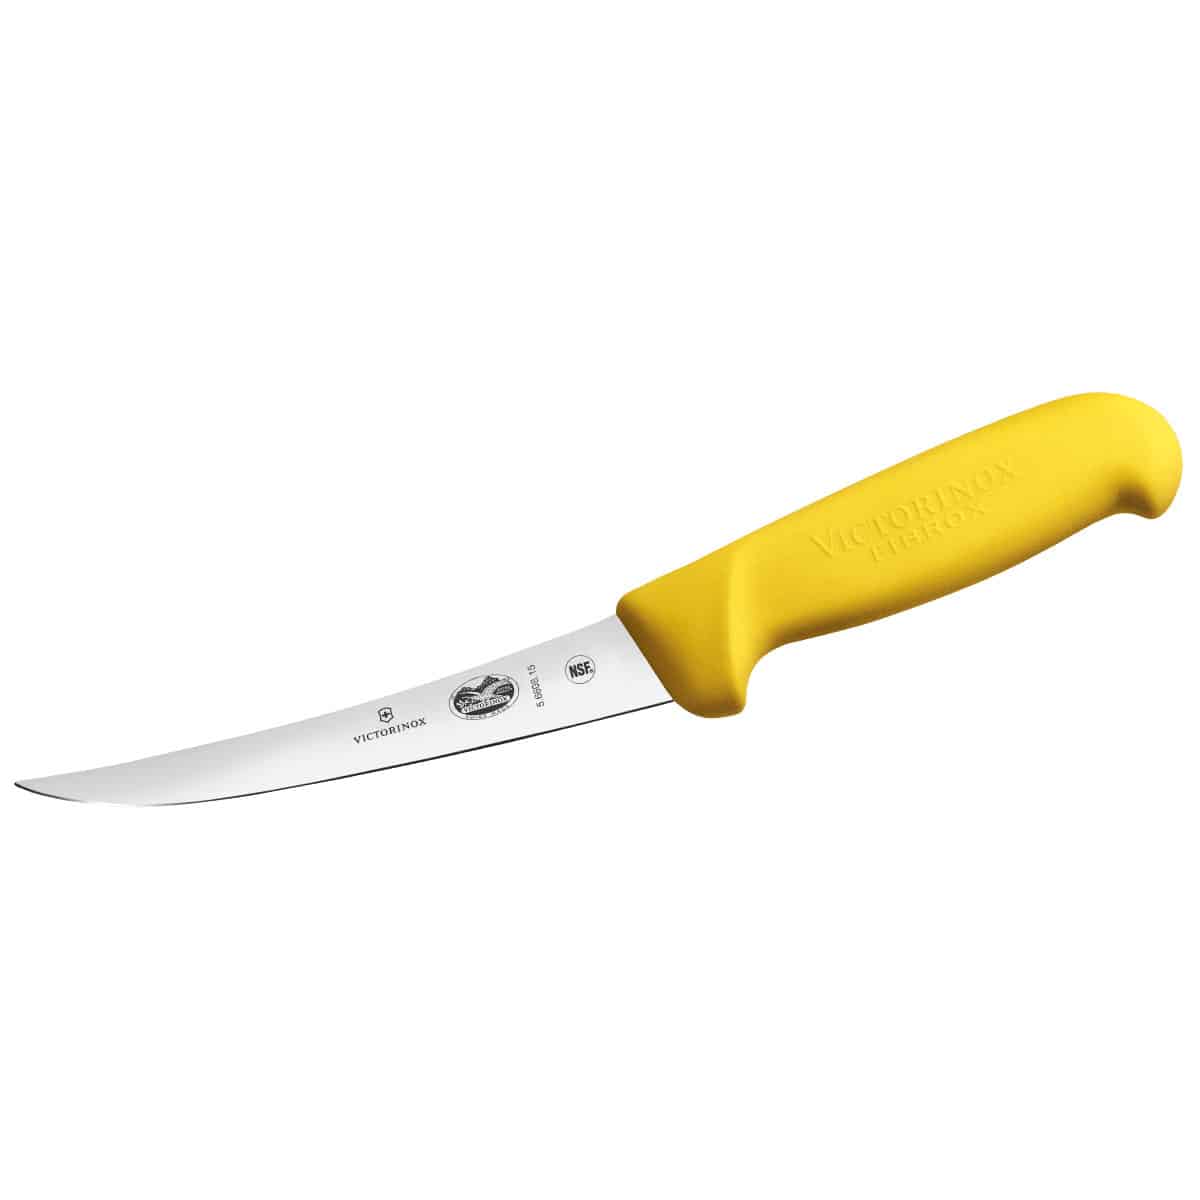 Victorinox Boning Knife, 15cm Curved & Narrow Blade, Yellow Handle